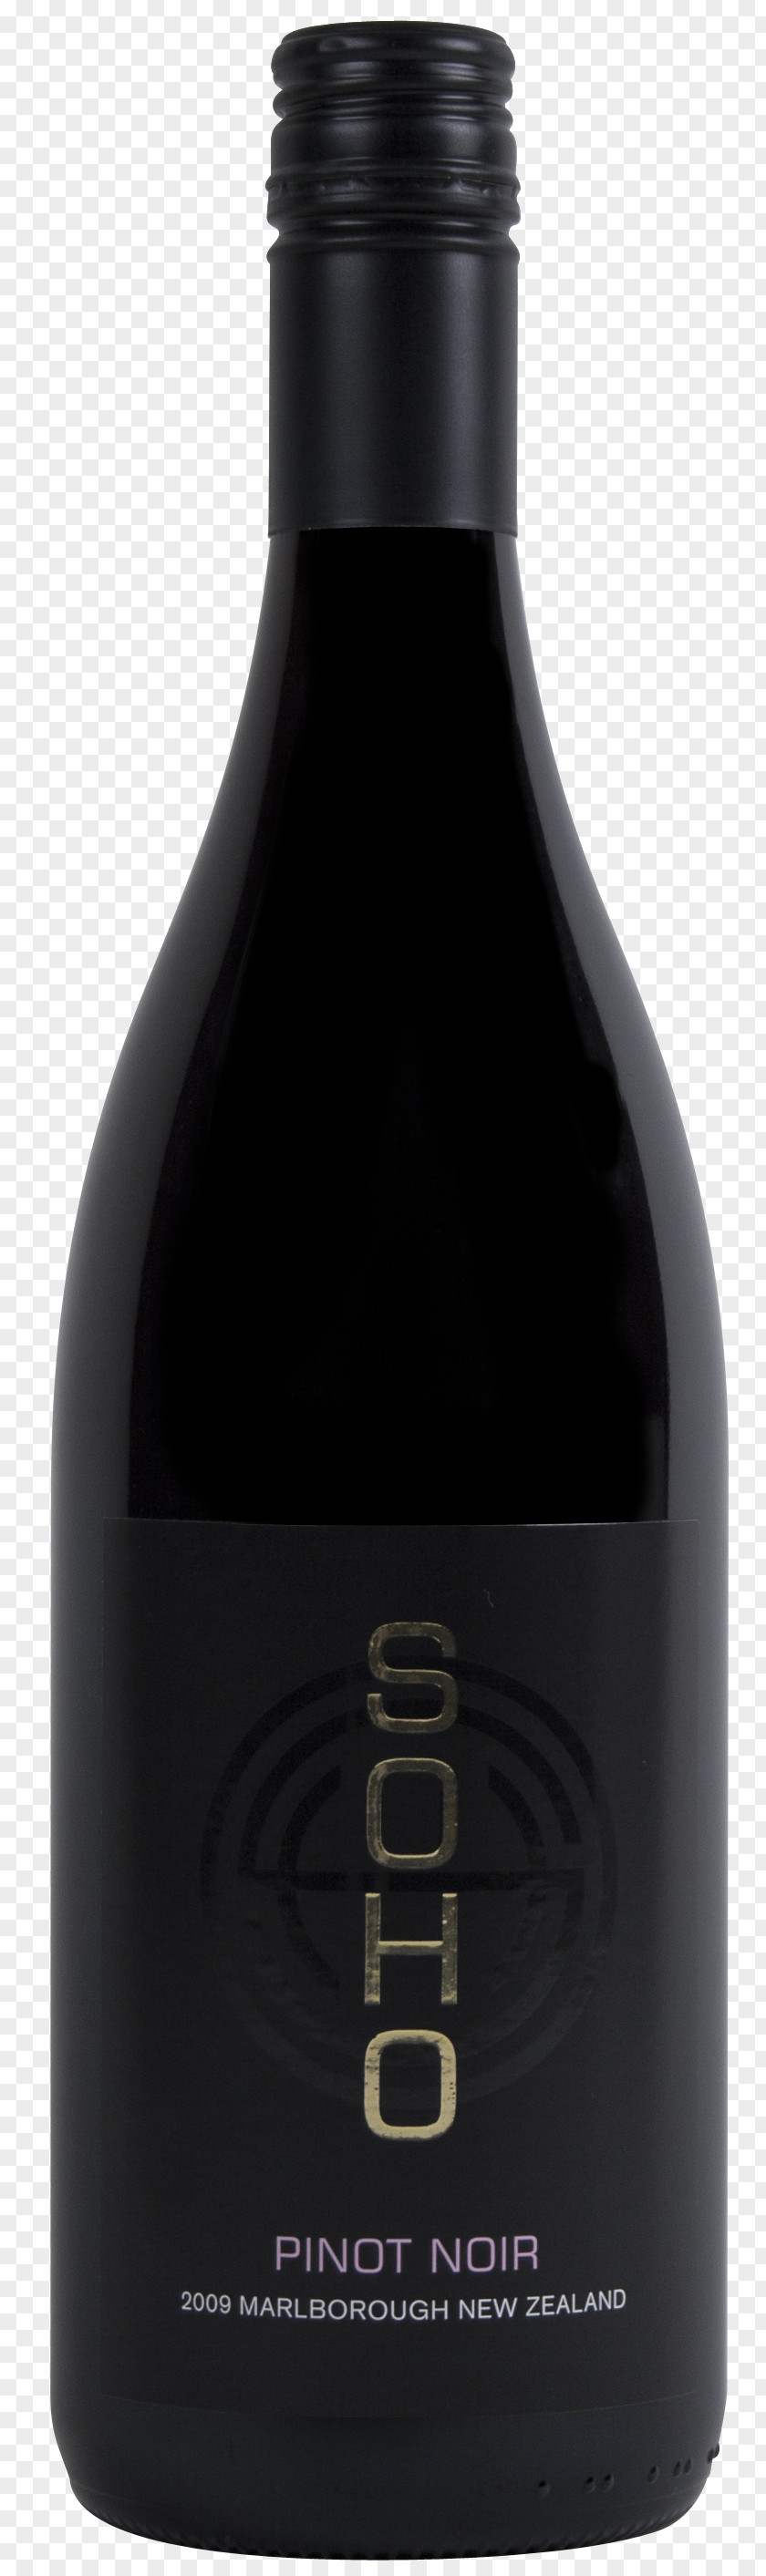 Red Label Pinot Noir White Wine Cabernet Sauvignon Bottle PNG